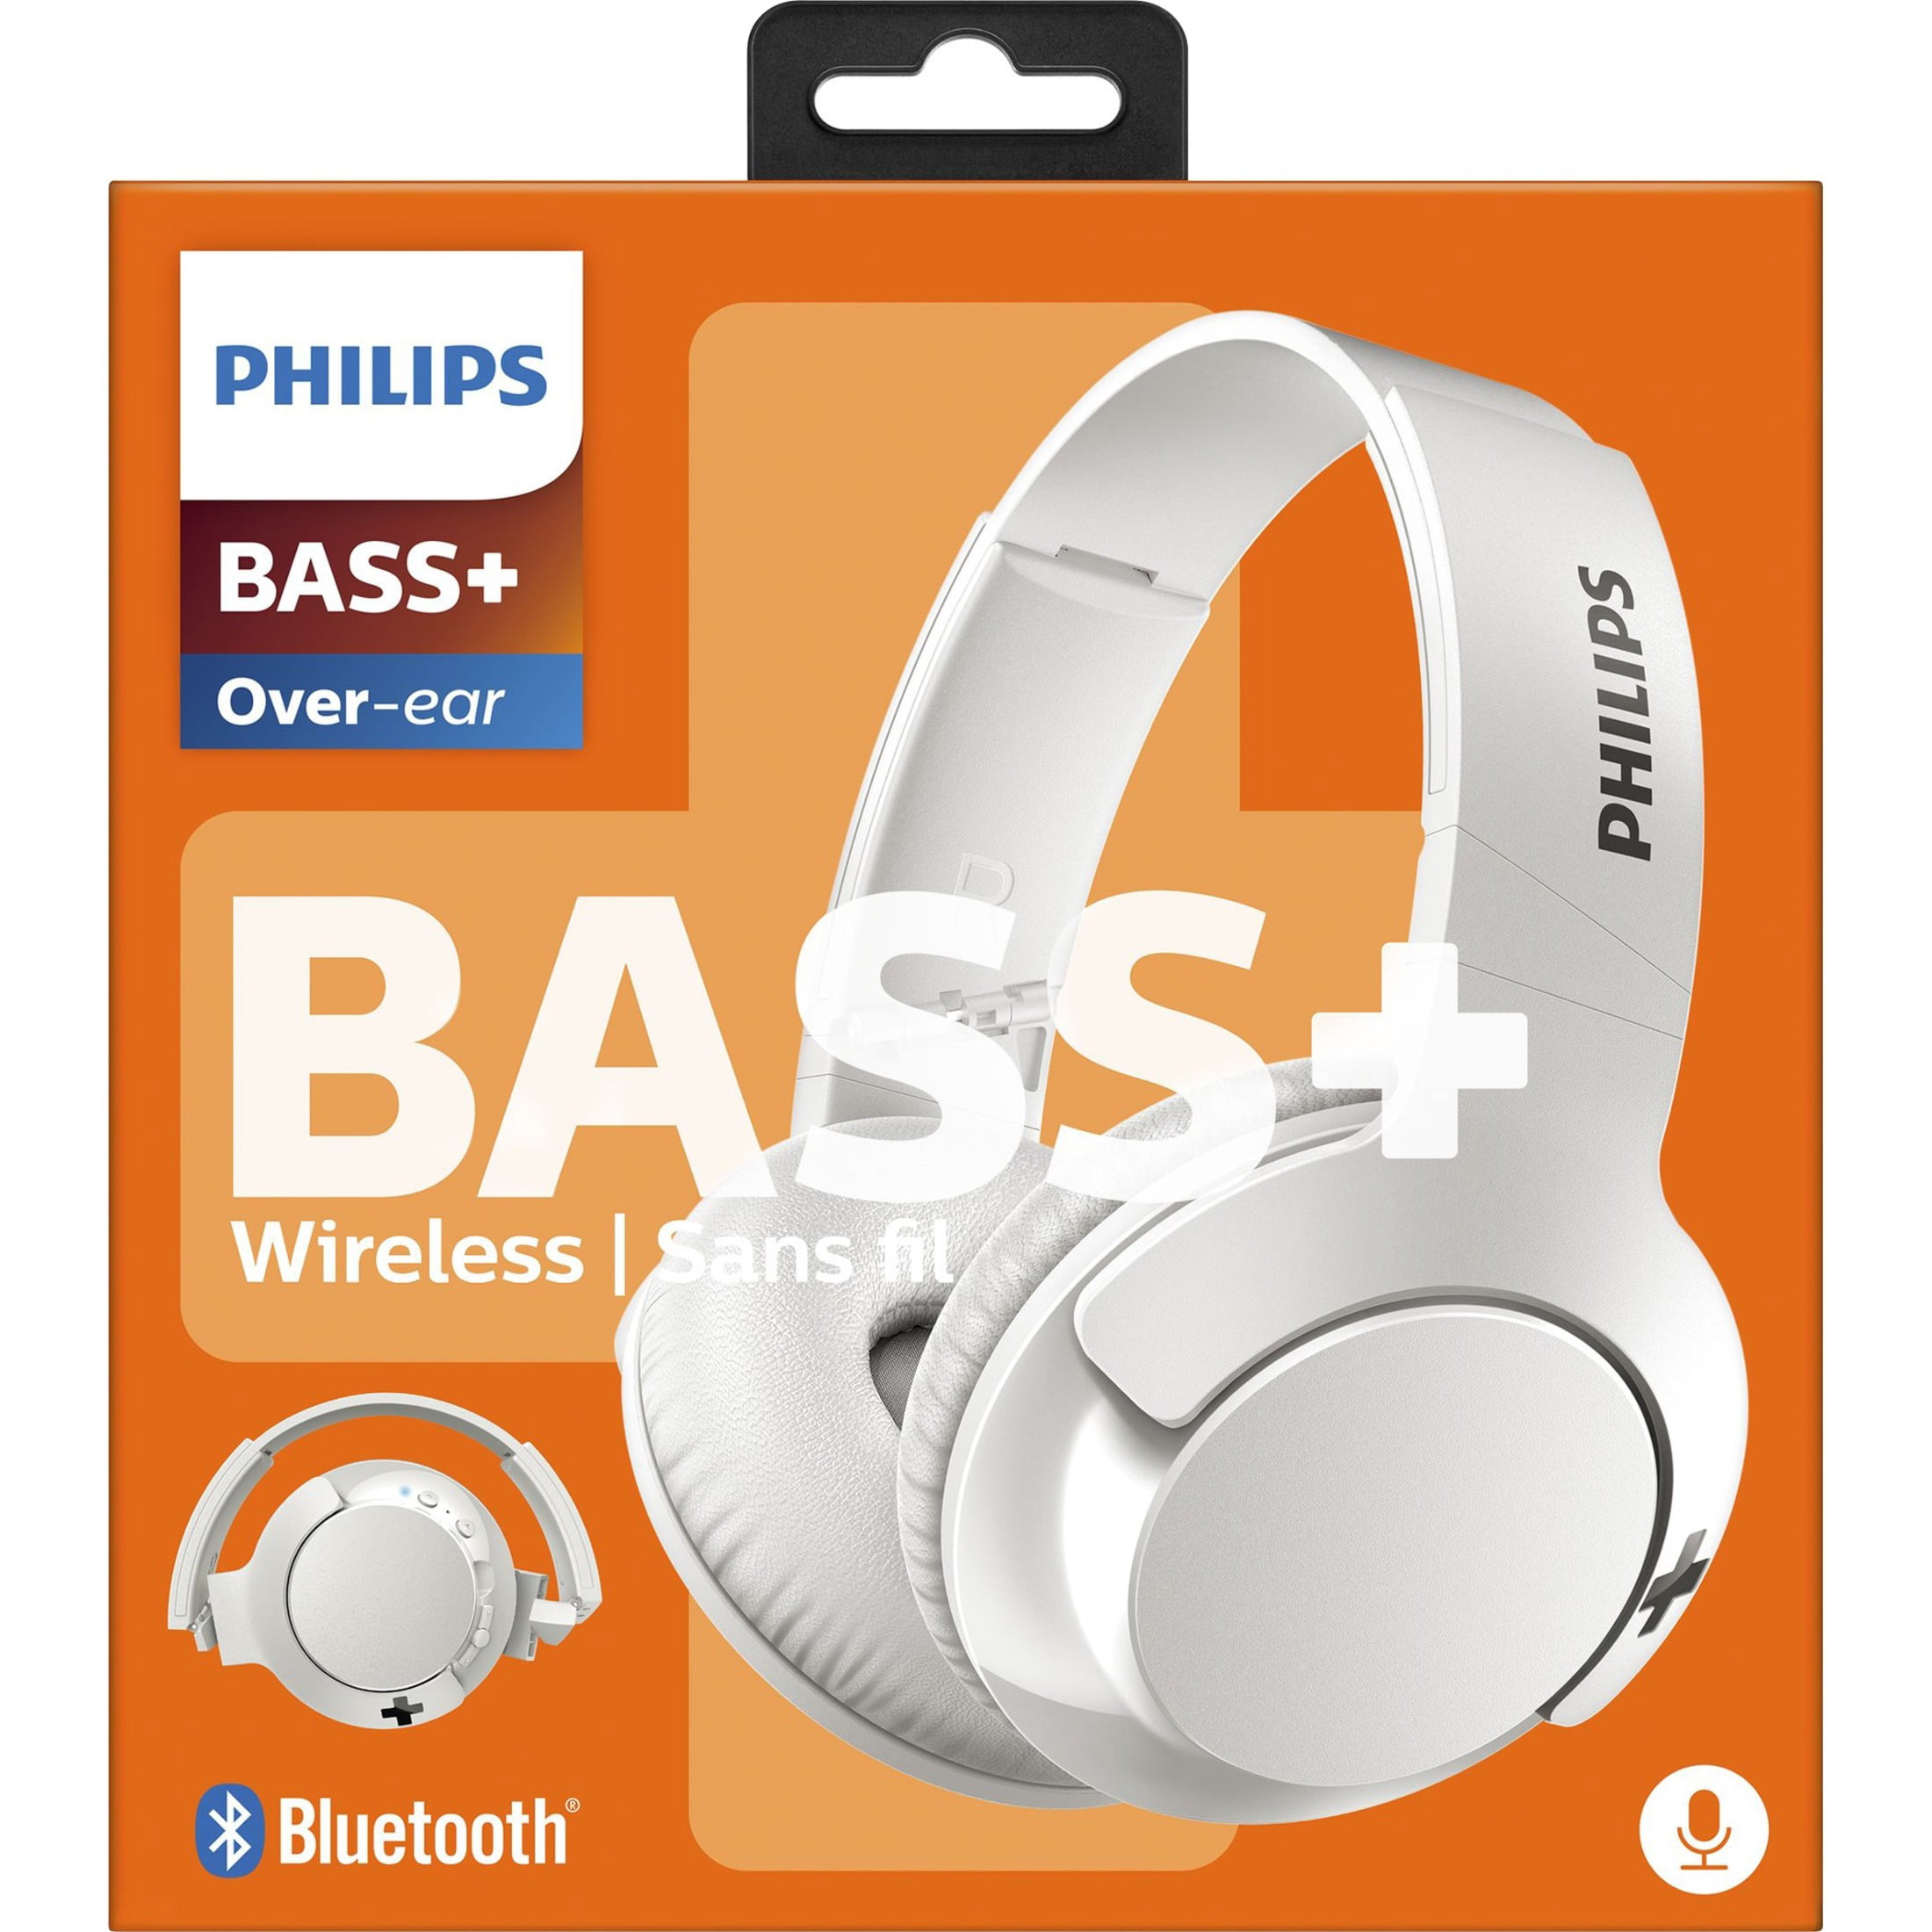 Philips bass. Philips Bass+ shb3175. Bluetooth наушники Philips Bass+ over Ear. Наушники Филипс беспроводные shl3175. Наушники проводные Philips Bass+.